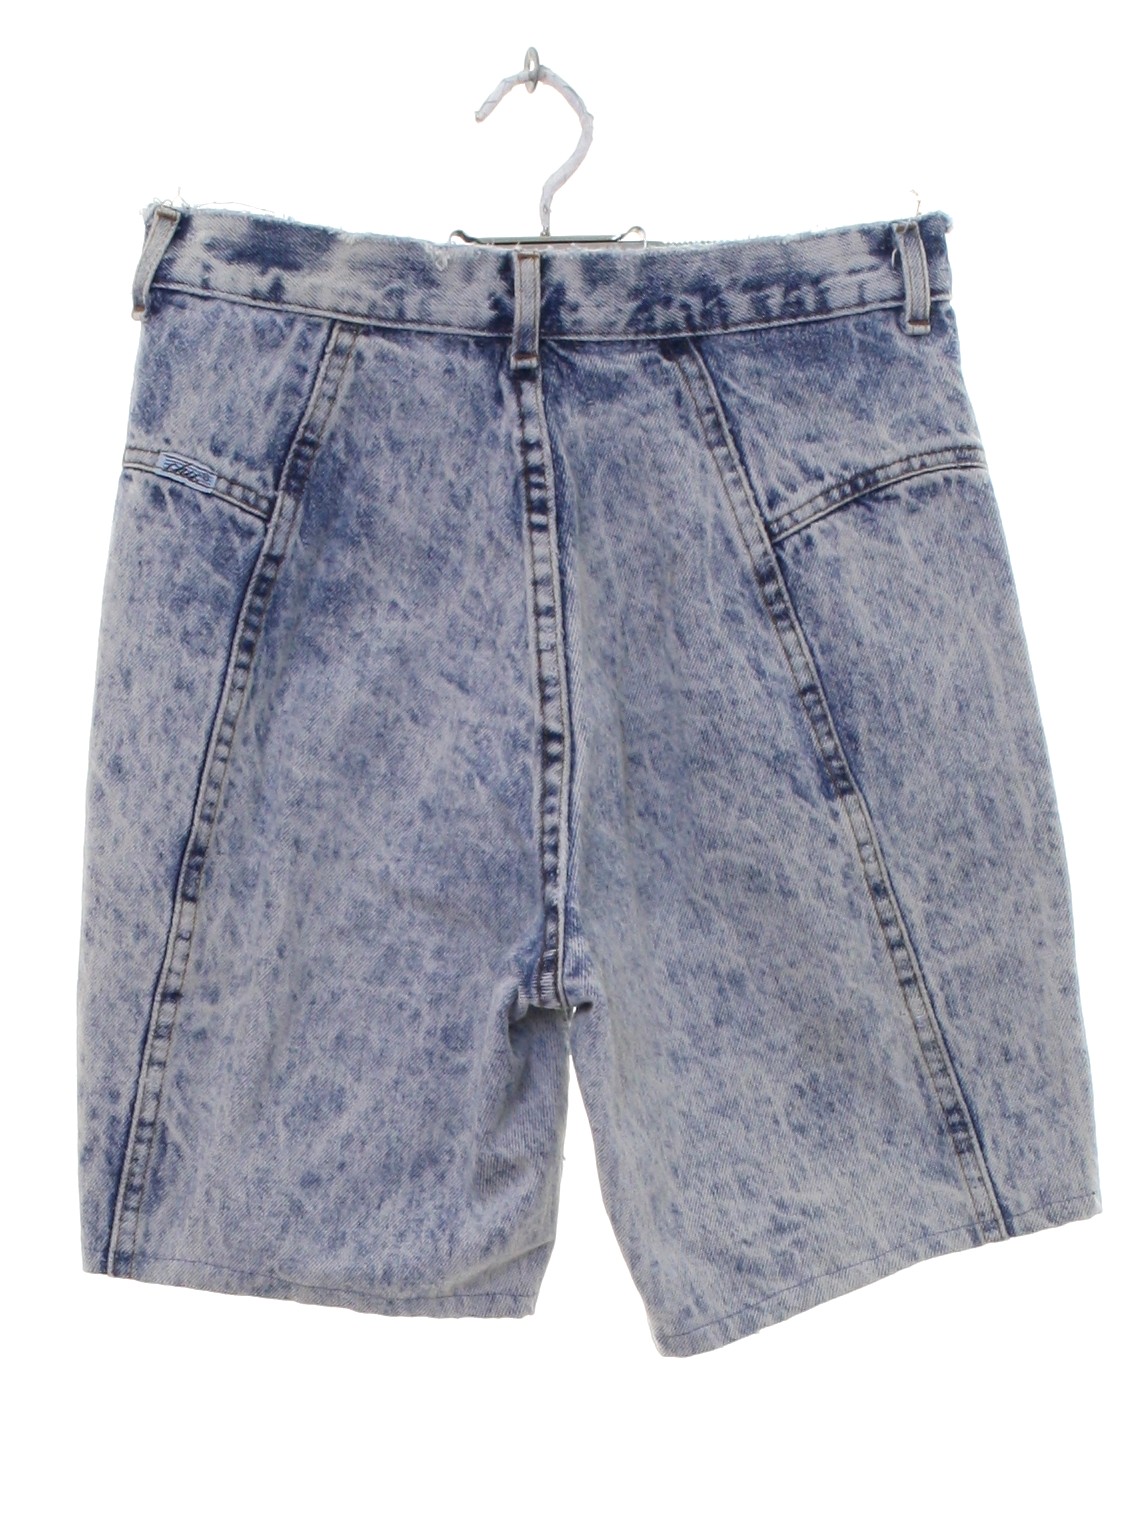 acid wash jean shorts